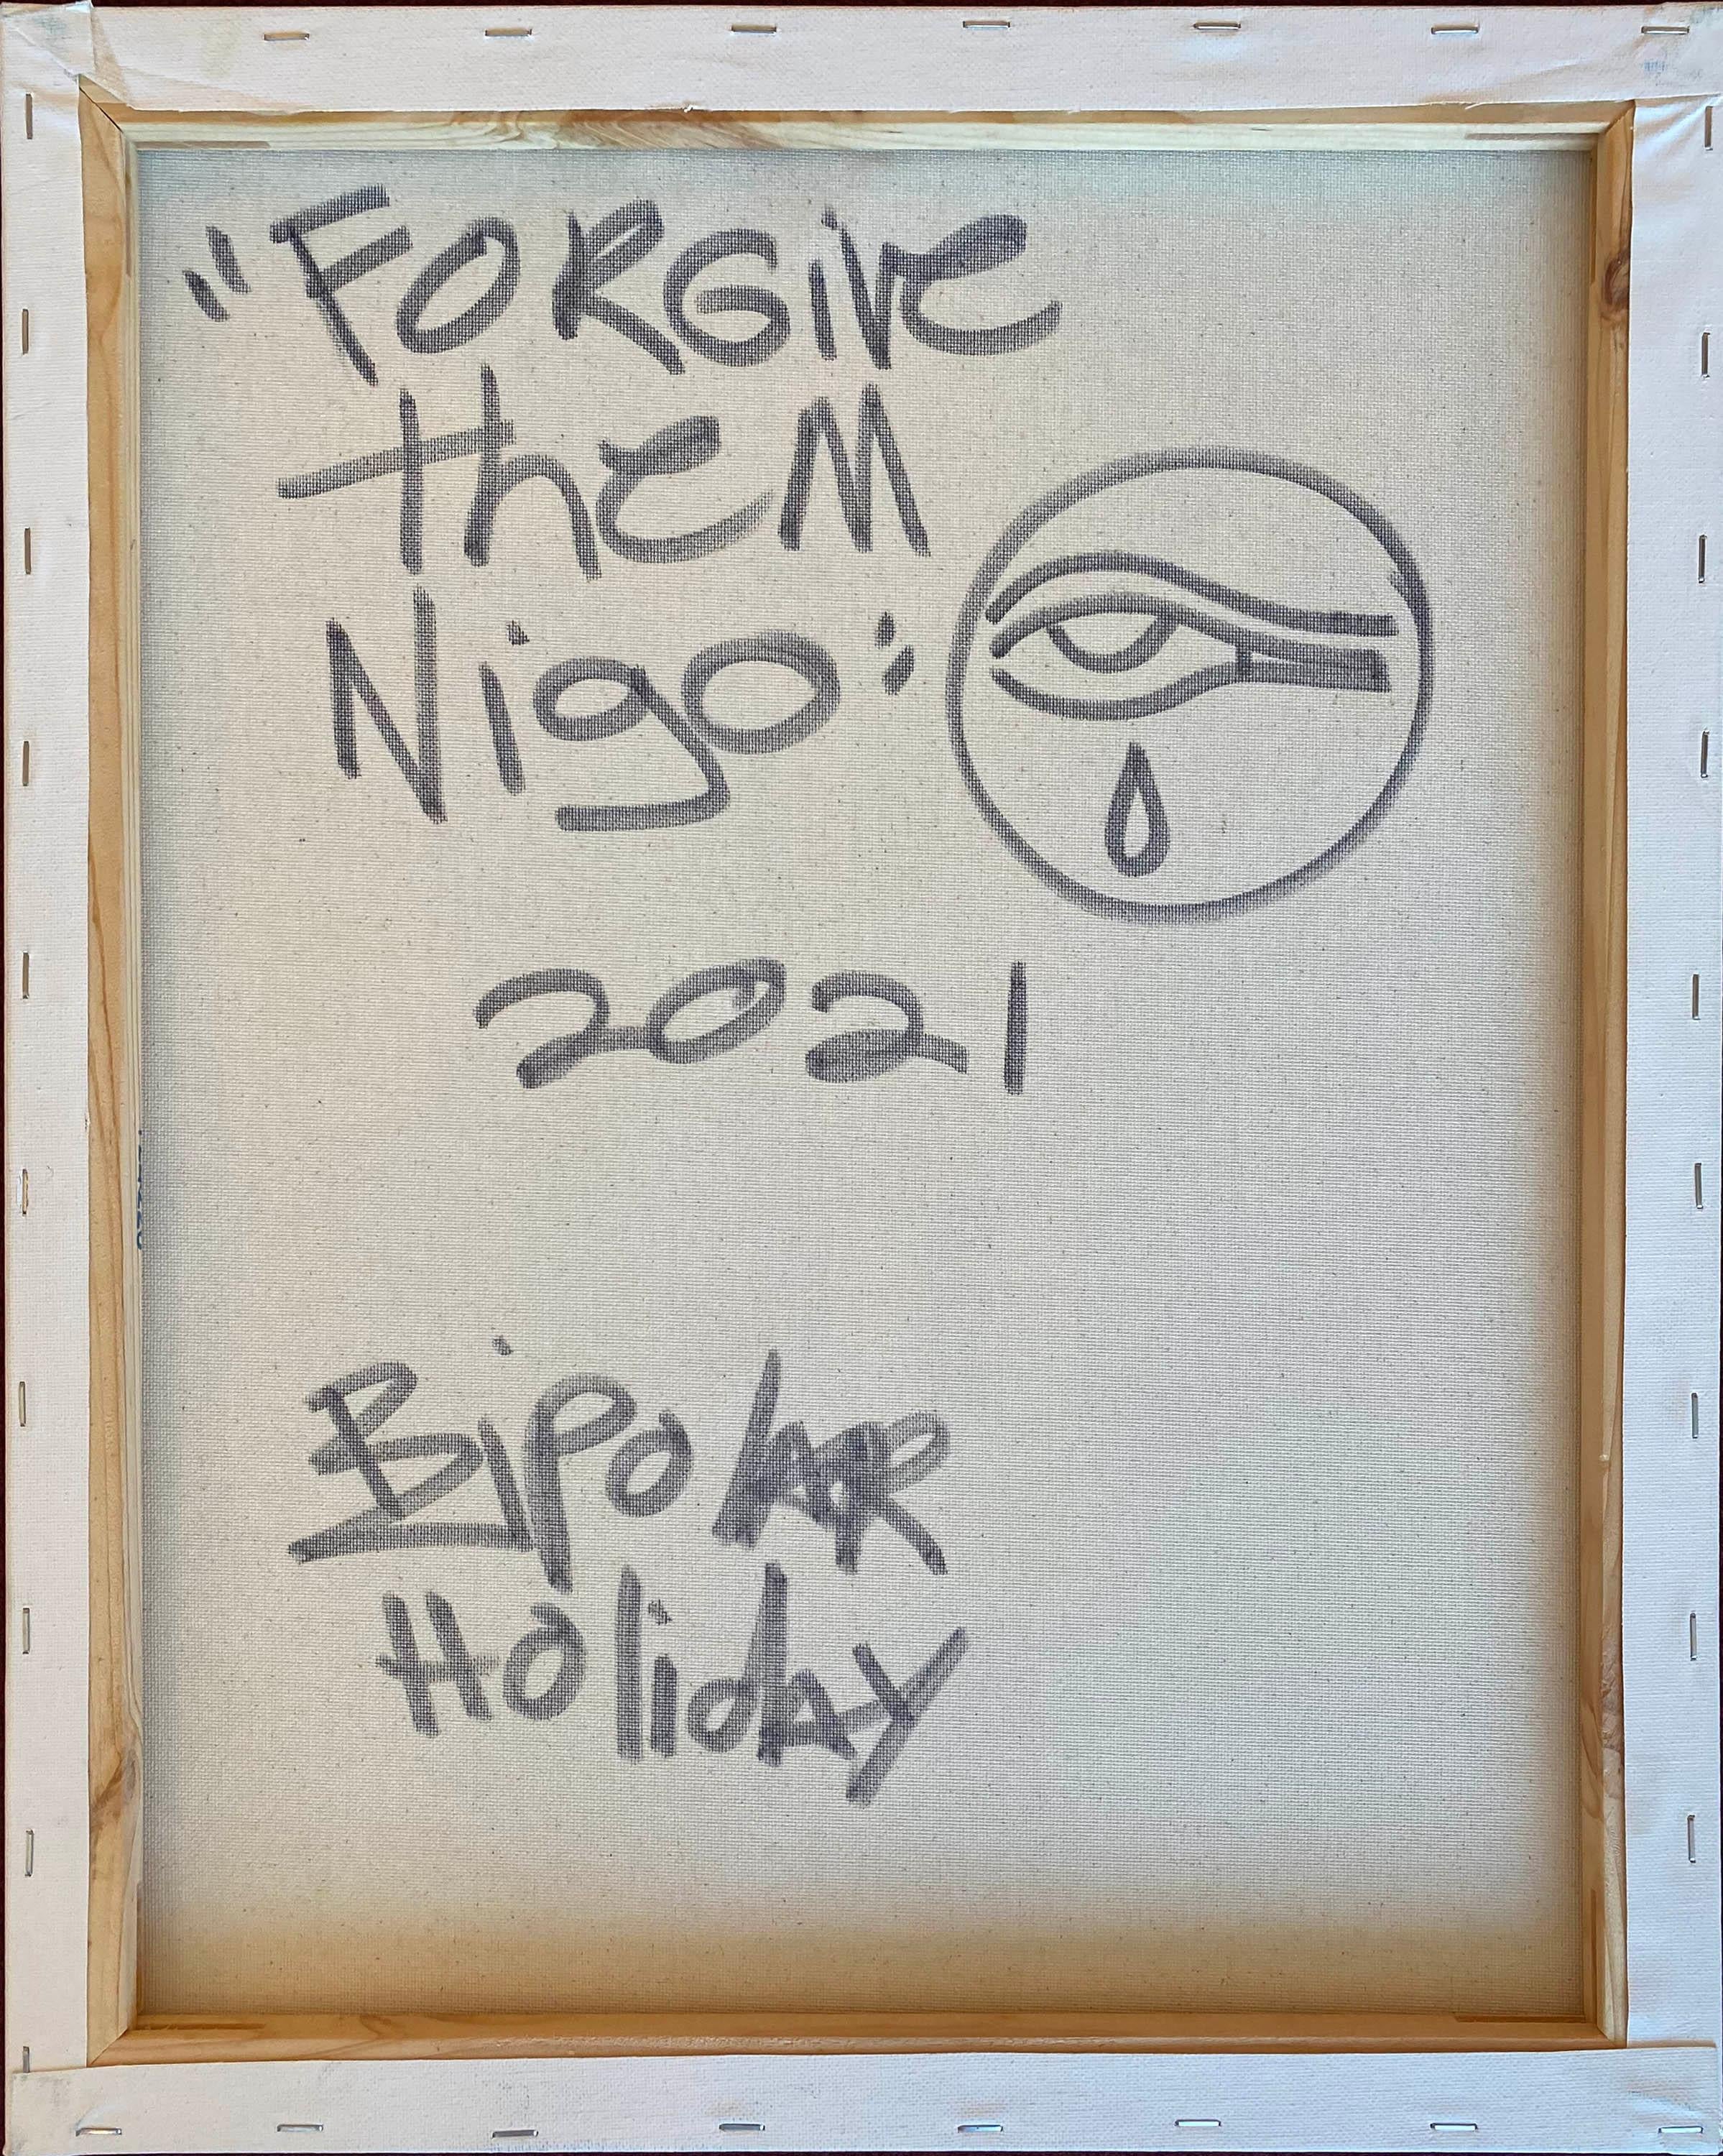 Forgive Them Nigo - Painting by Bipolar Holiday